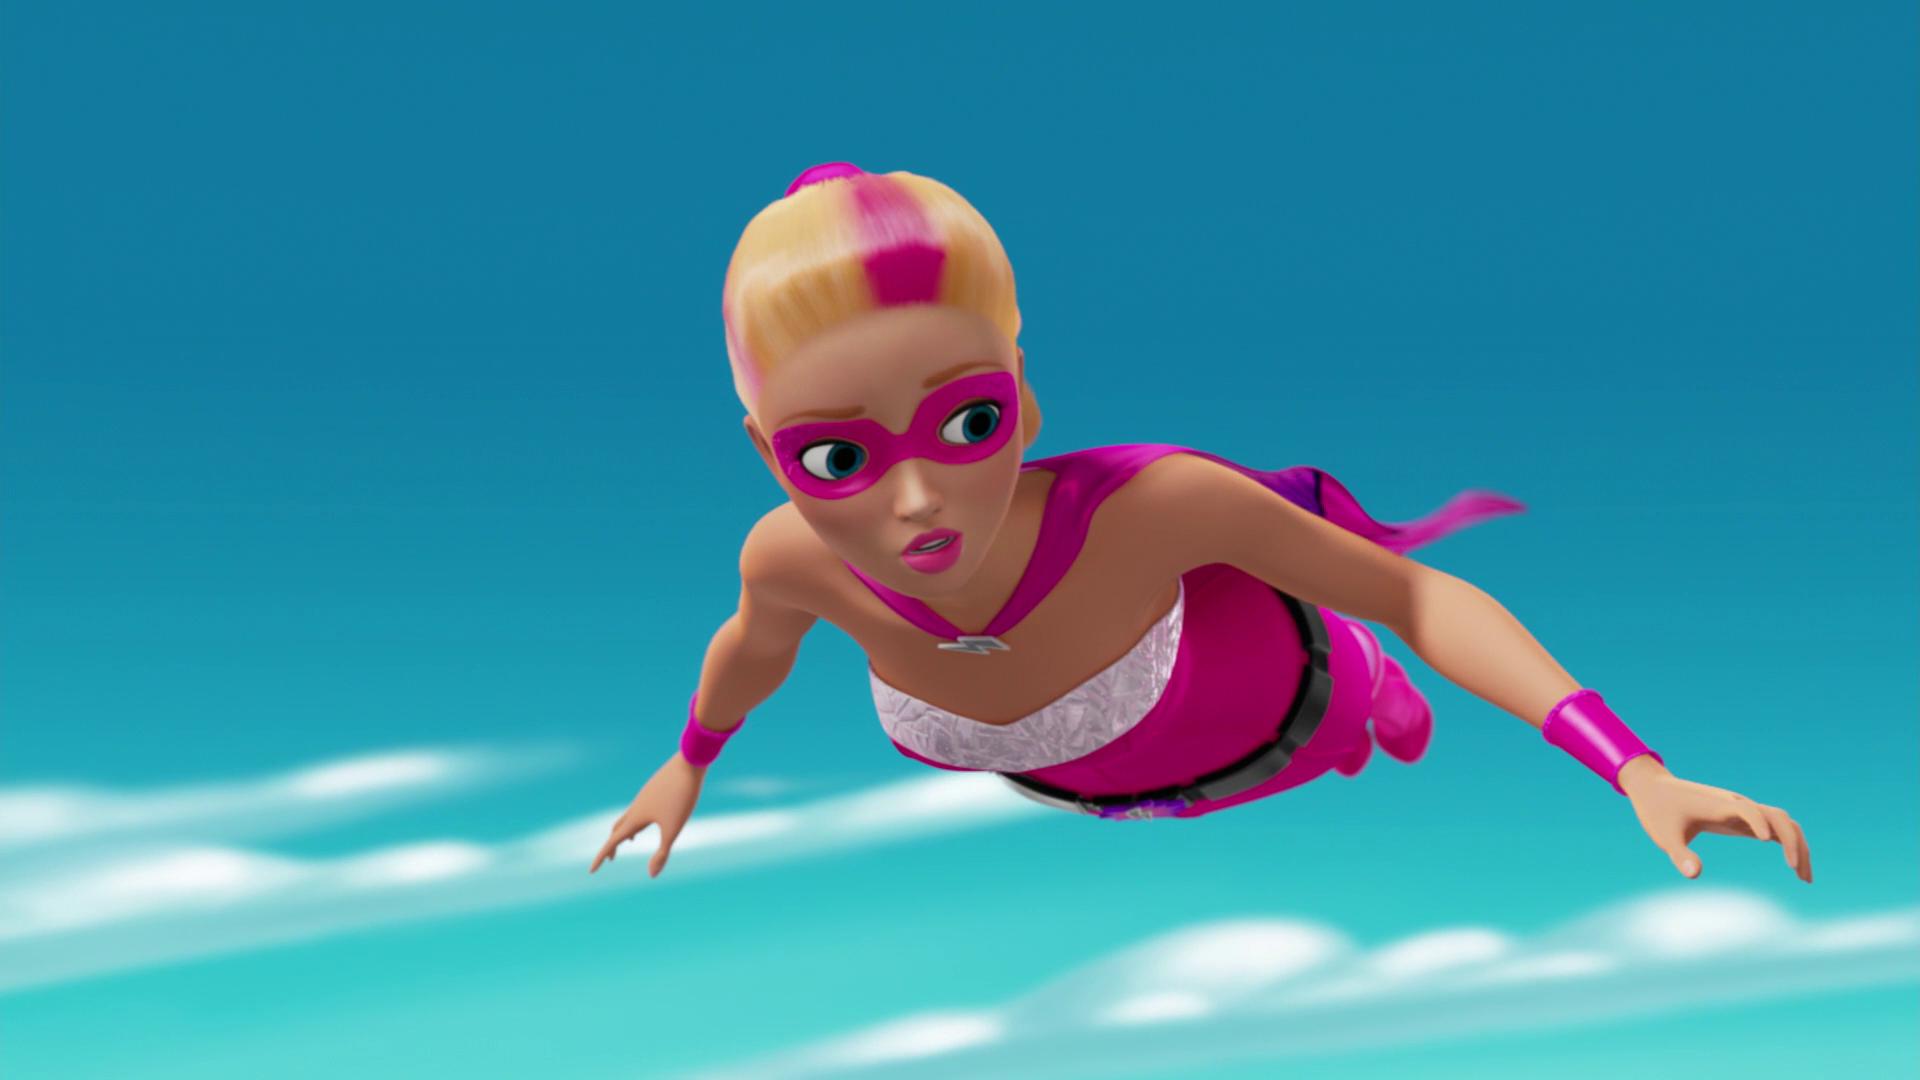 Movie Barbie in Princess Power HD Wallpaper | Background Image